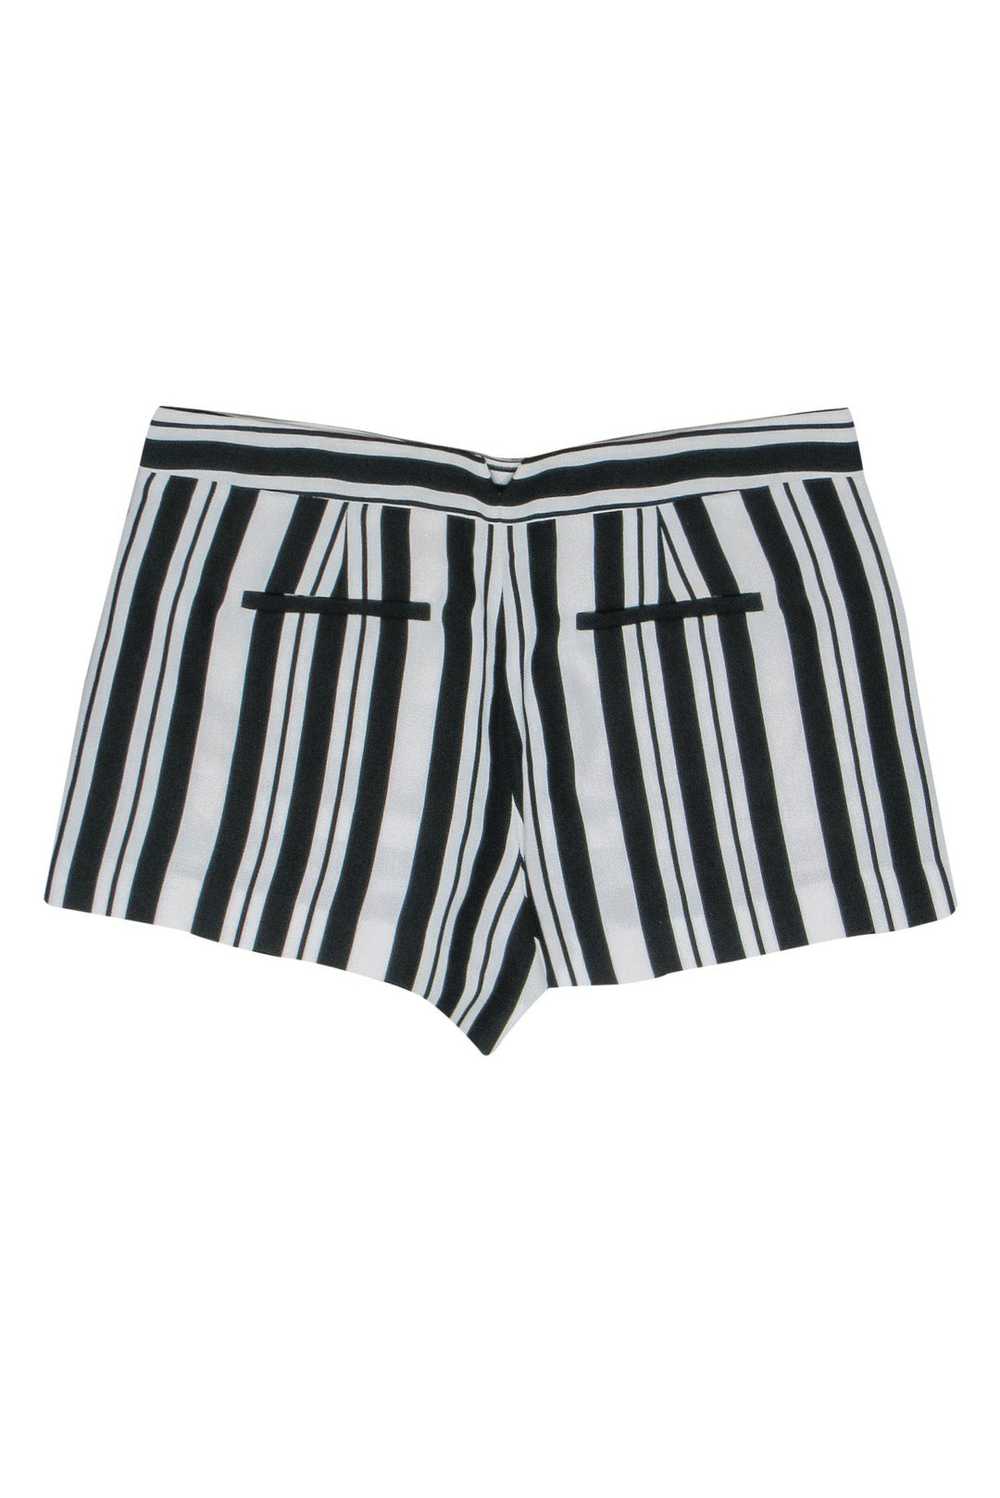 Tibi - Black & White Striped Shorts Sz 0 - image 2